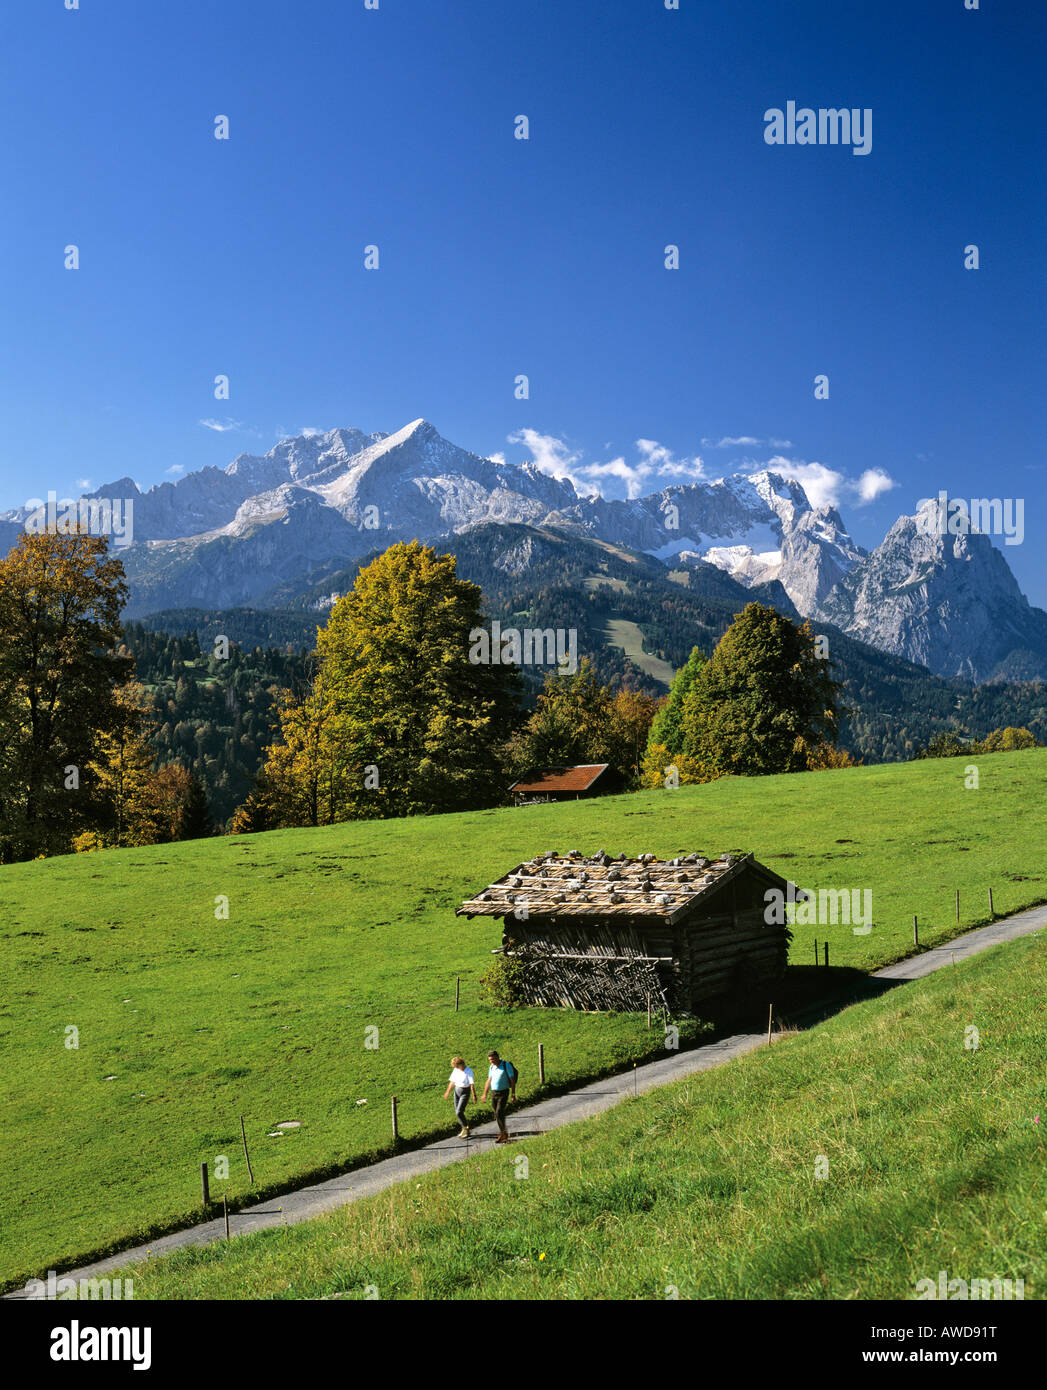 Sentiero escursionistico vicino a Garmisch-Partenkirchen, autunno, Wetterstein mountain range, Alta Baviera, Germania Foto Stock